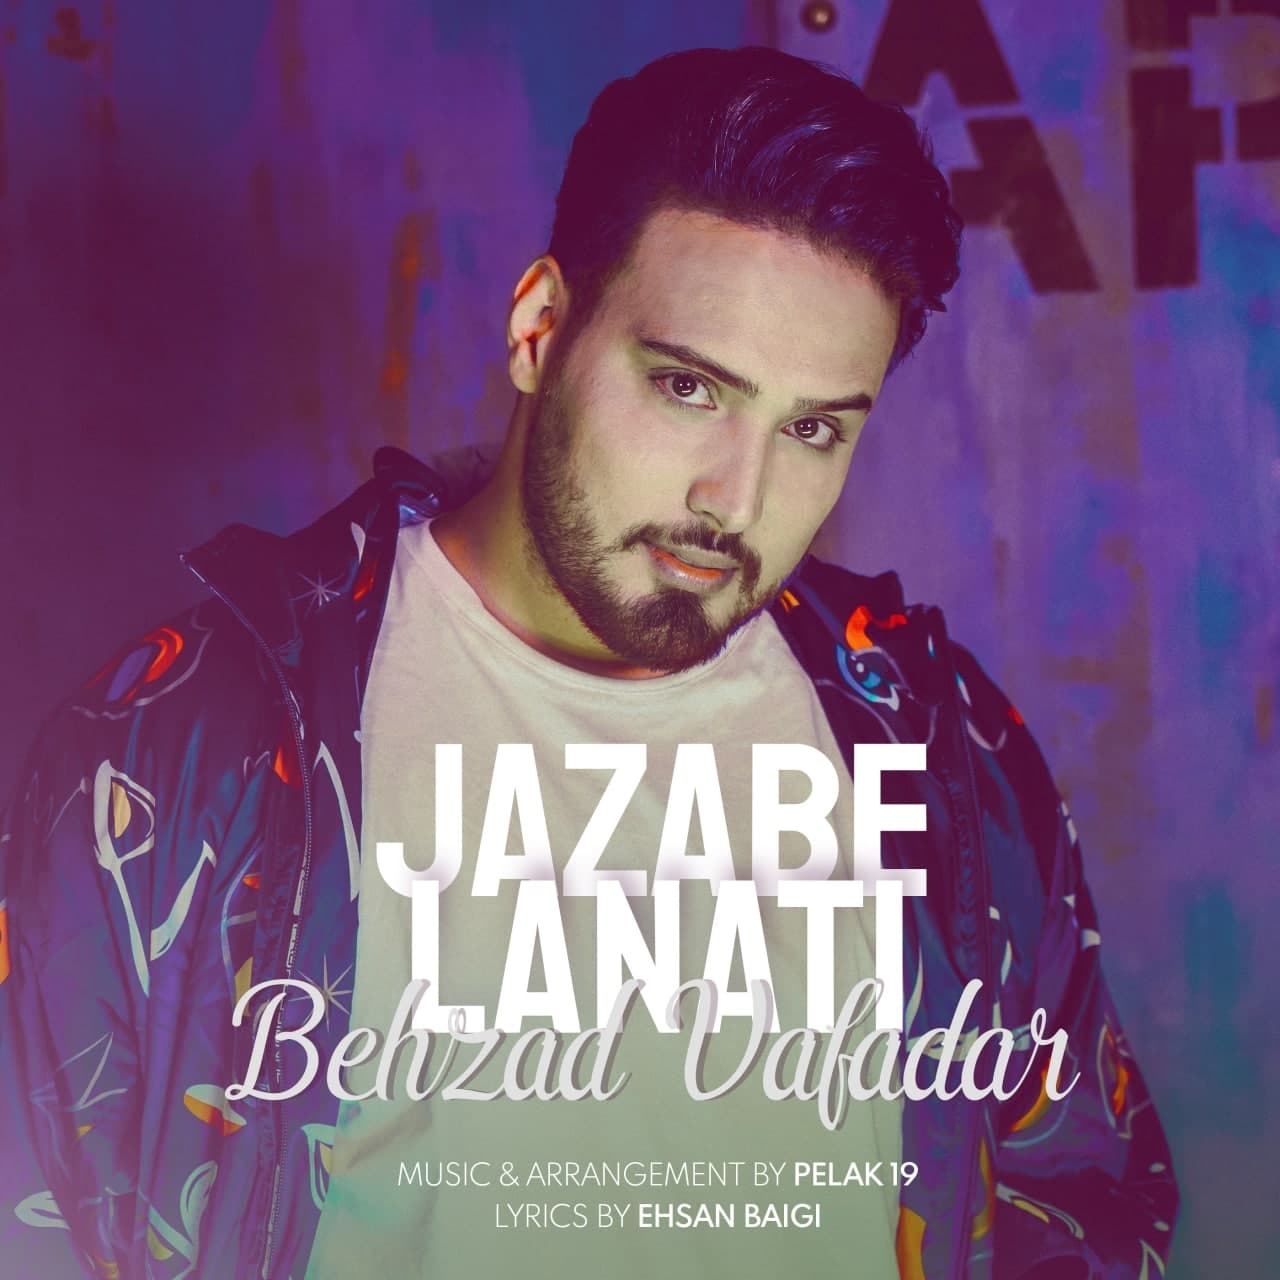 Behzad Vafadar – Jazabe Lanati